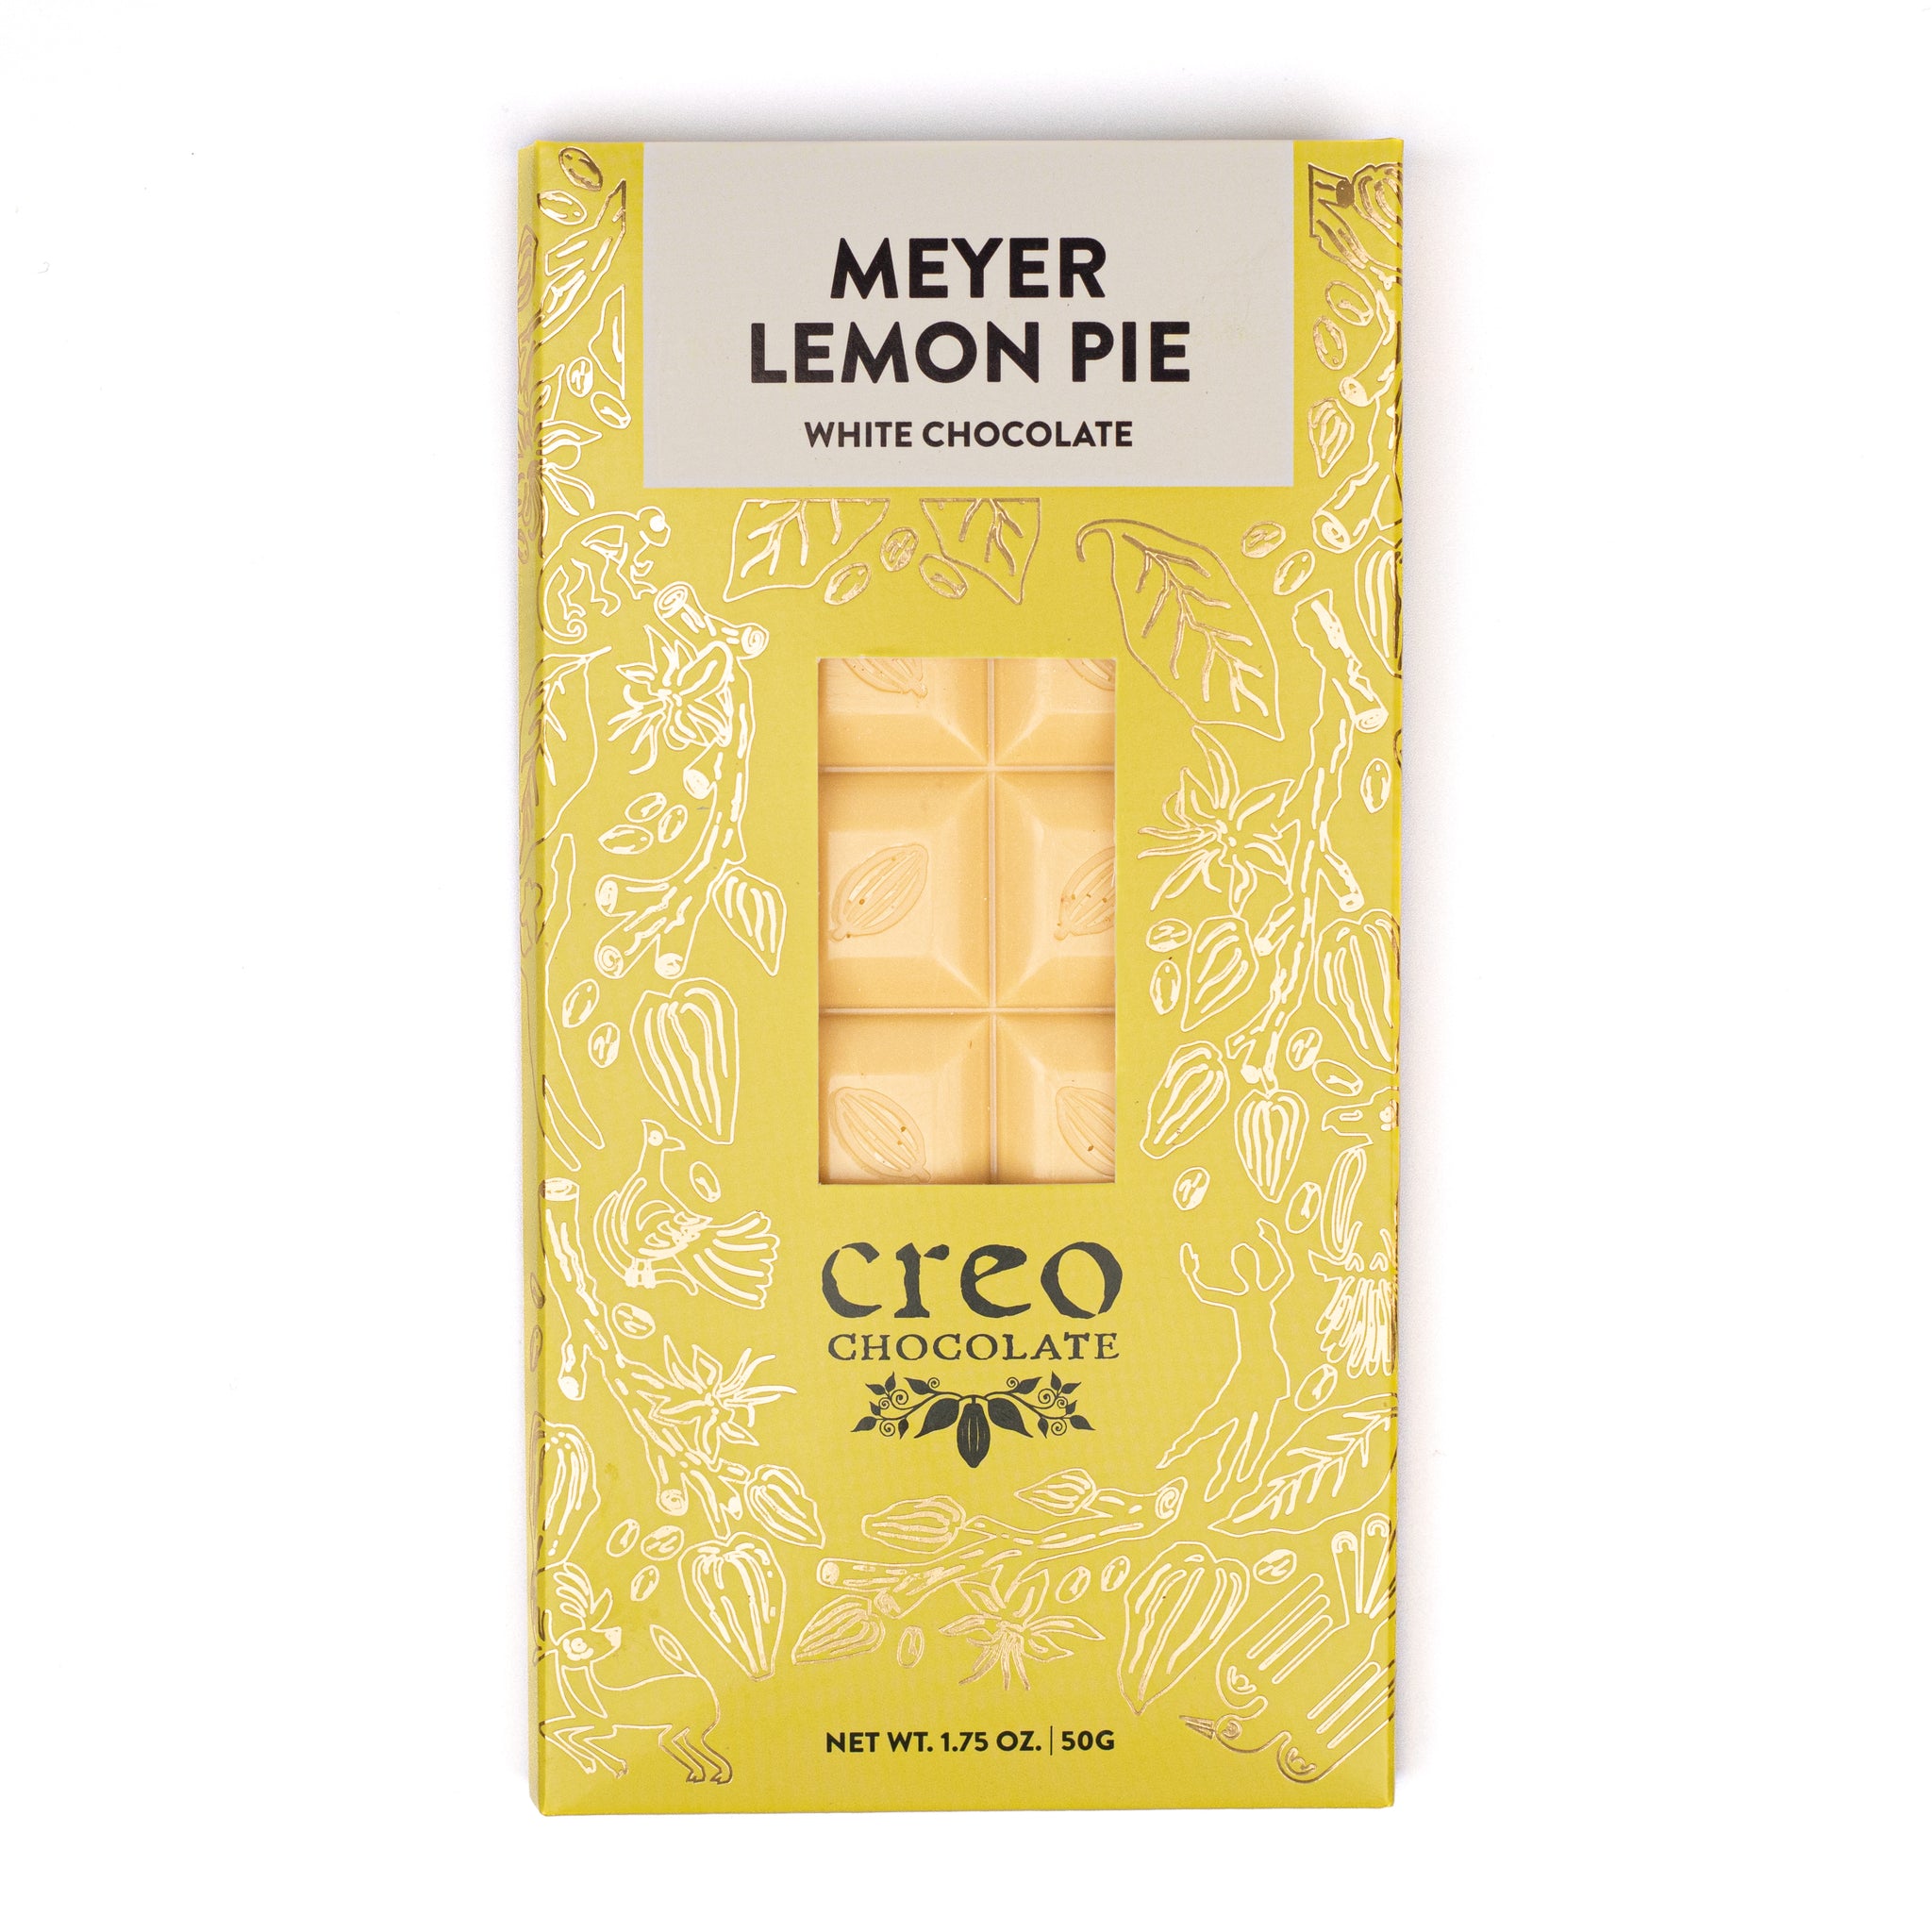 Meyer Lemon Pie White Chocolate Bar